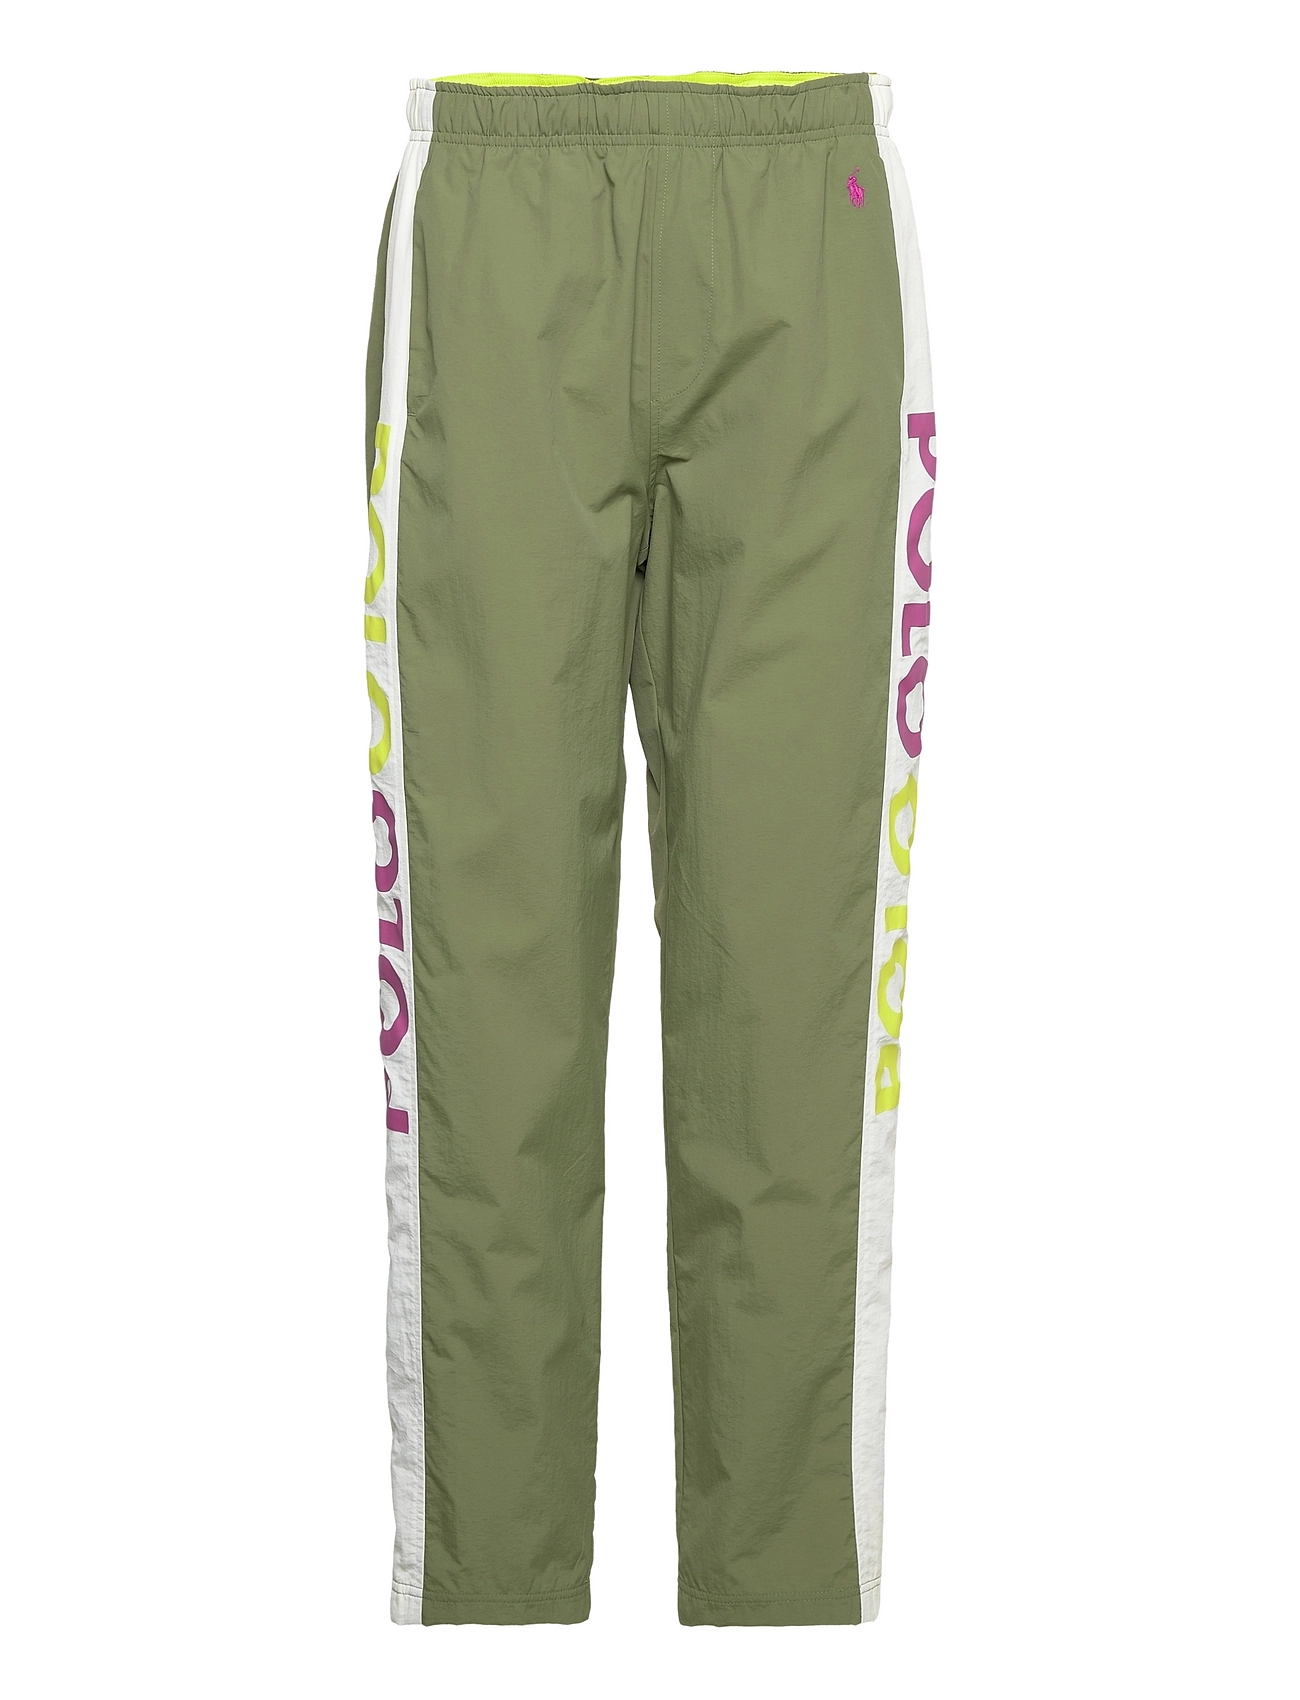 Polo Sport Ralph Lauren Graphic Print Ski Pants w/ Tags - Green, 14.25  Rise Pants, Clothing - WPSRN20165